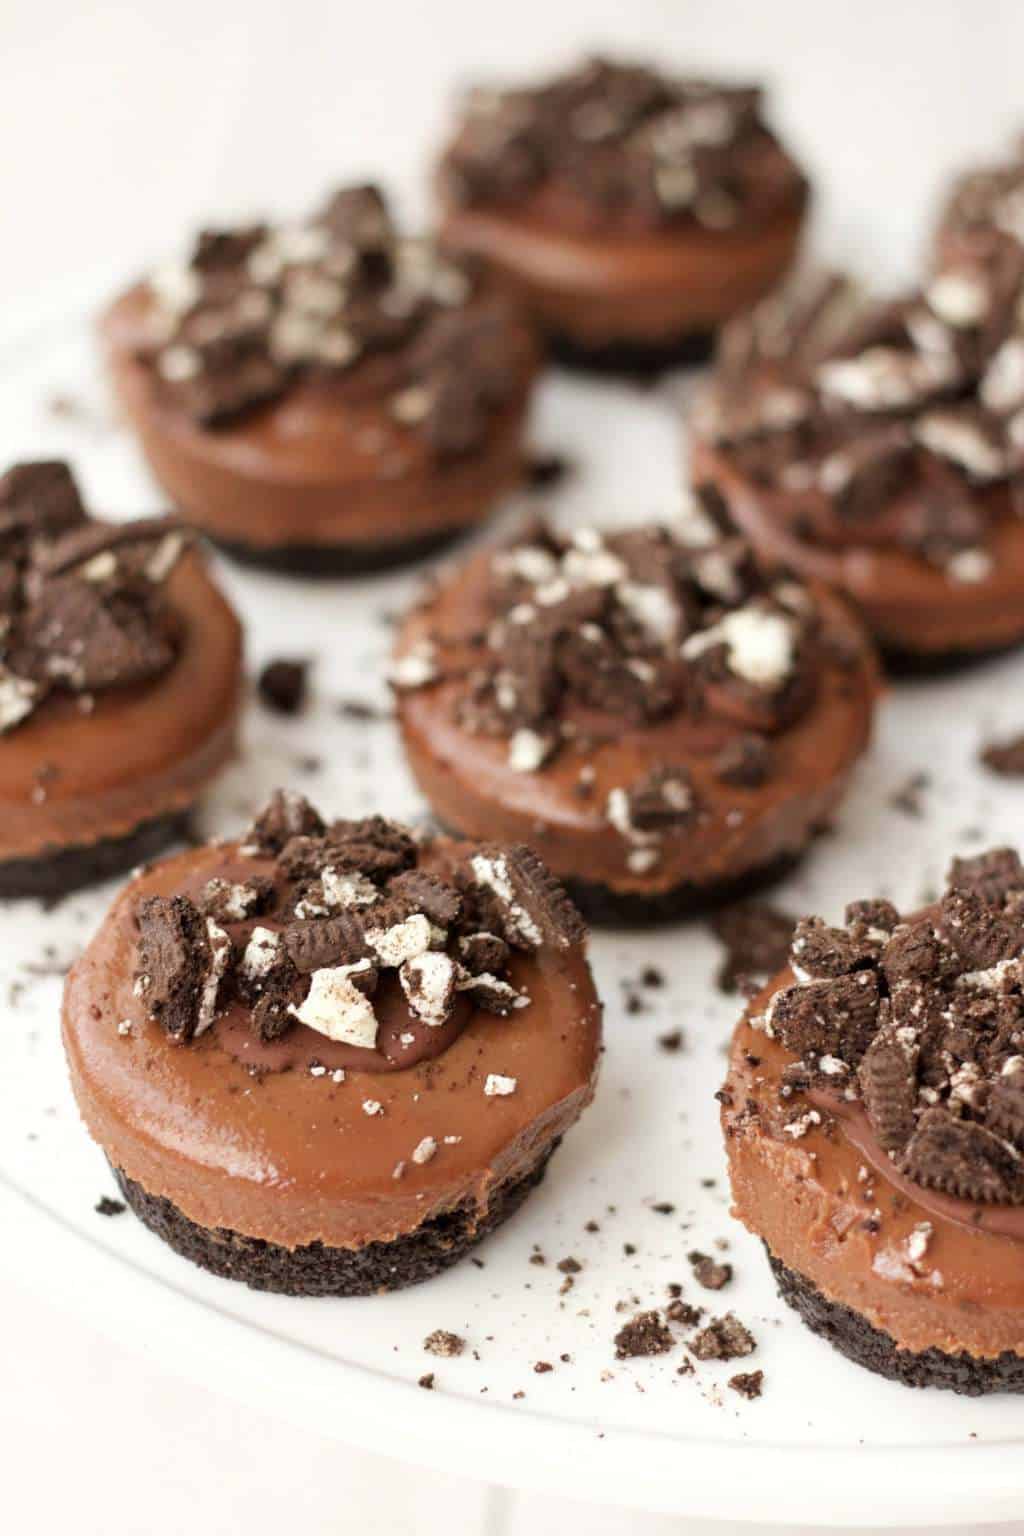 Mini Vegan Sjokolade Cheesecakes #vegan #lovingitvegan #cheesecakes #dessert #dairyfree #oreos